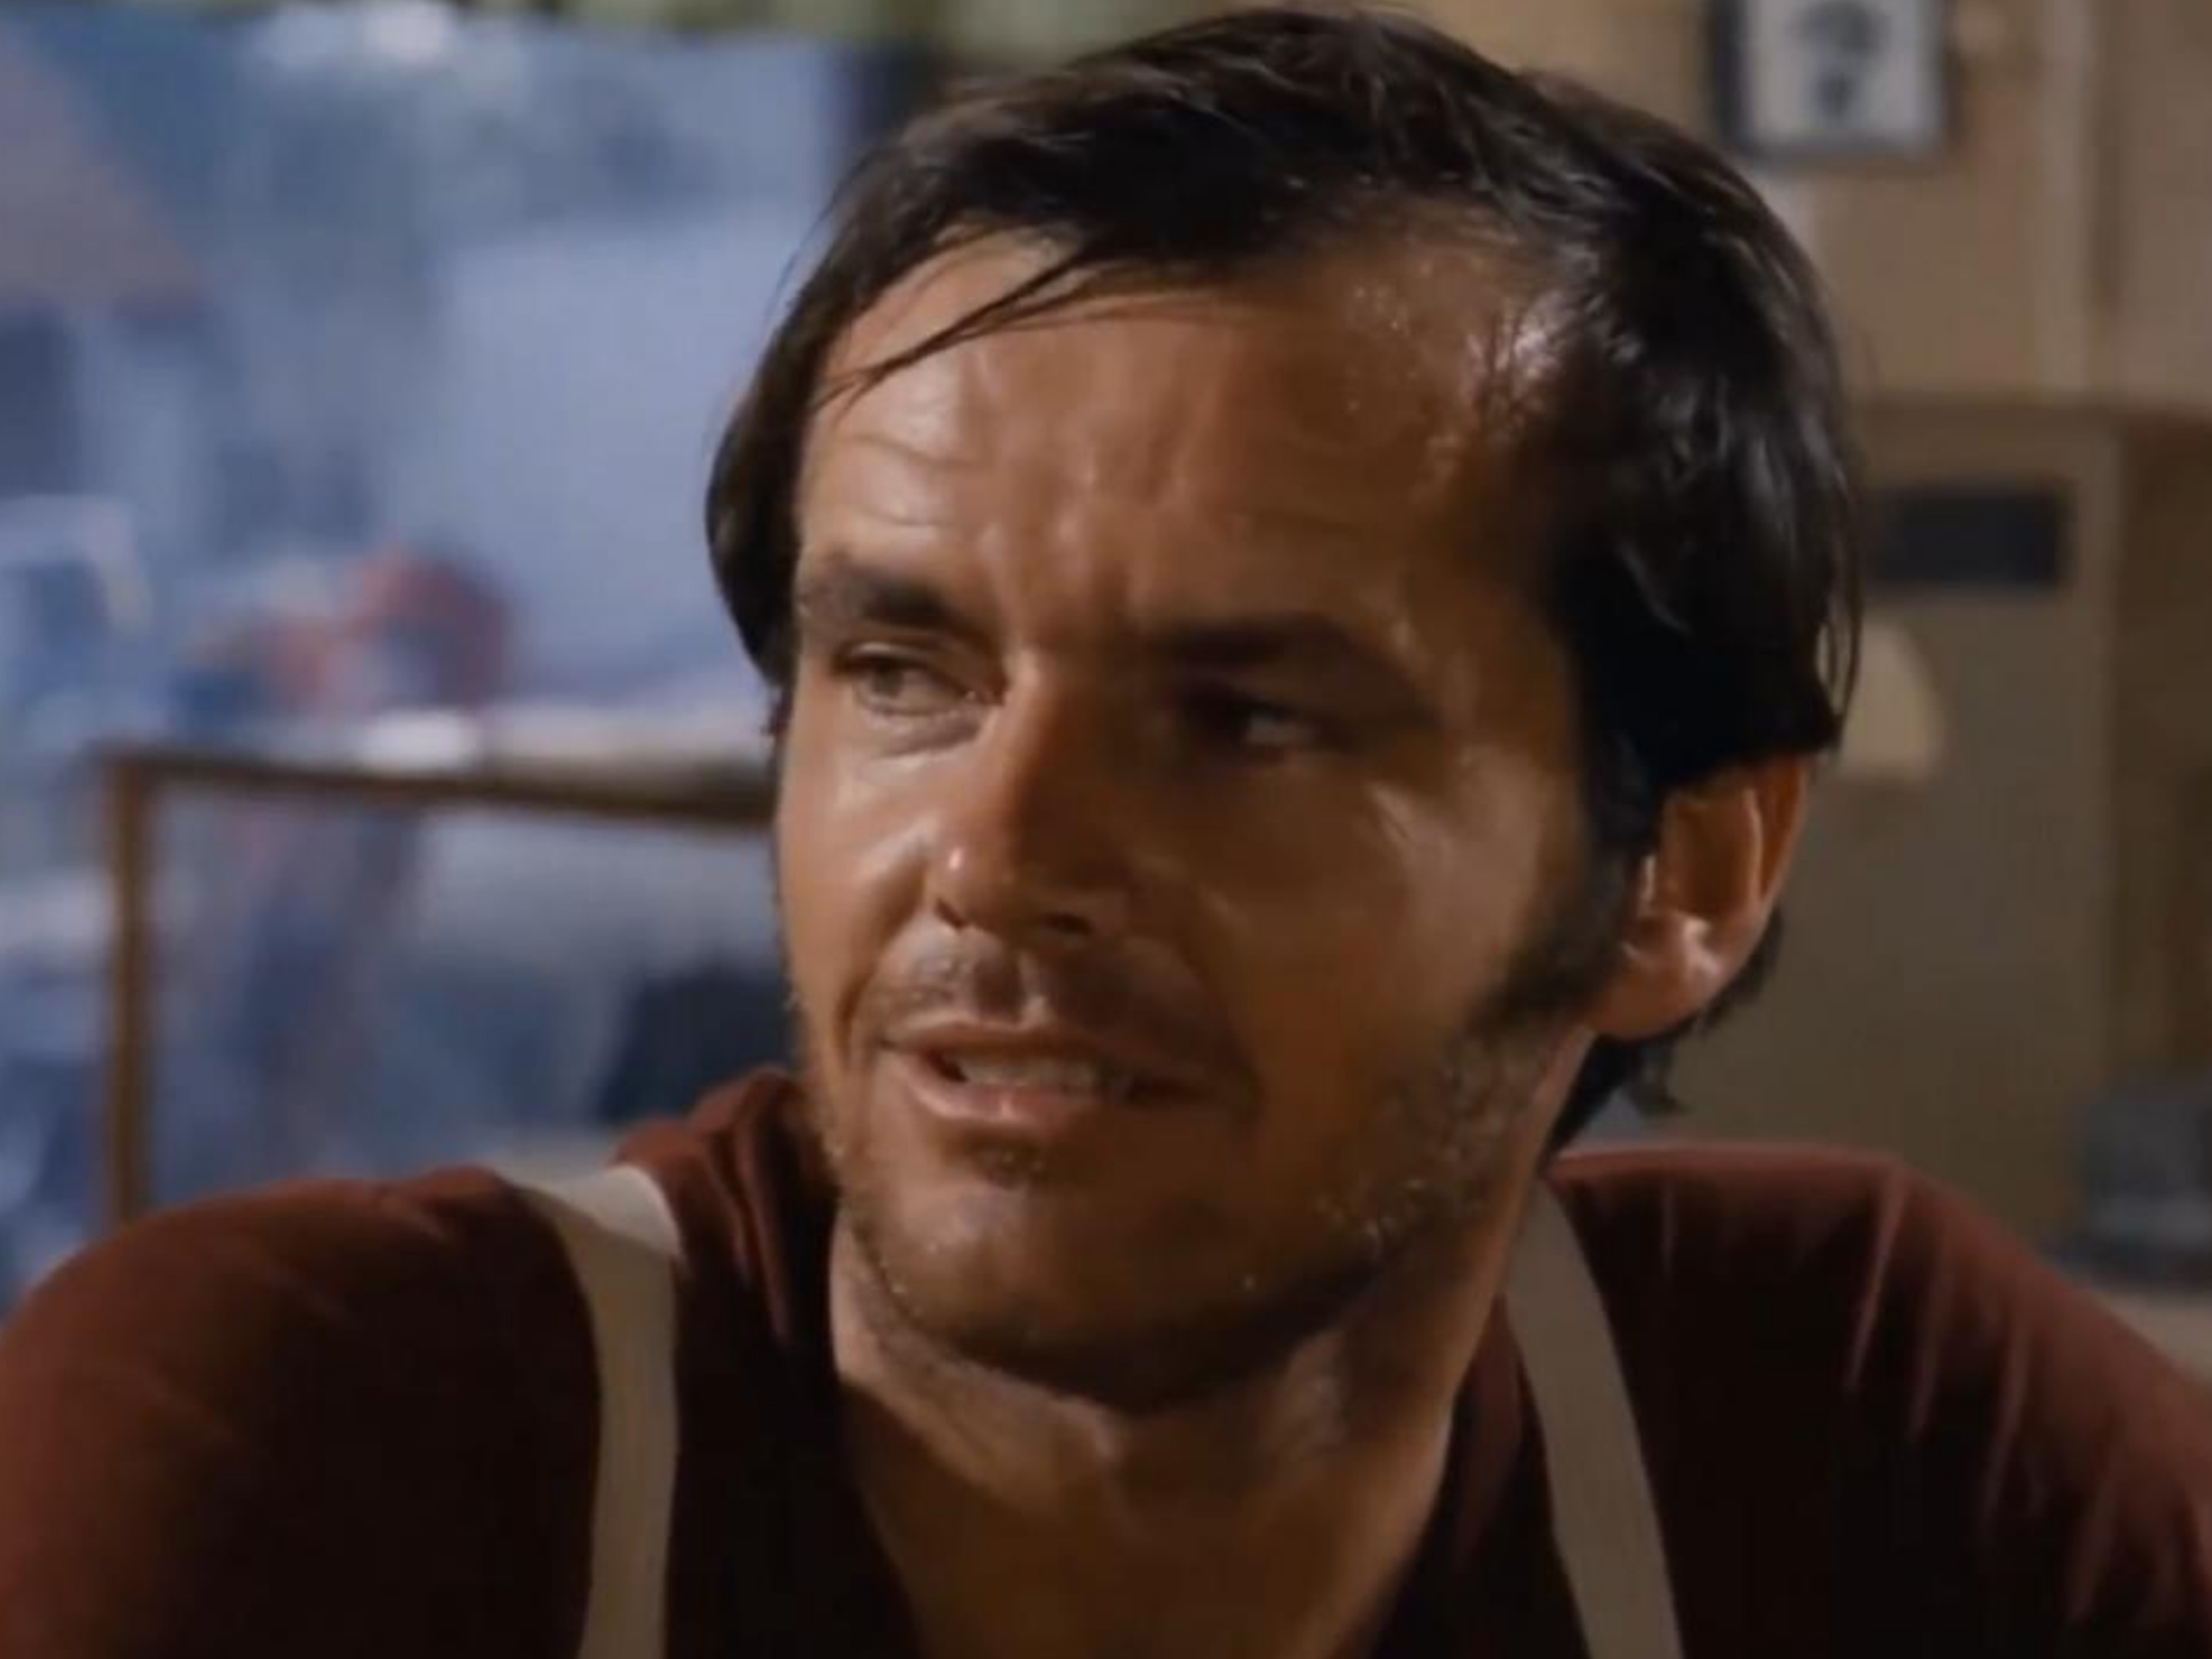 Jack Nicholson in “Easy Rider” (1969)